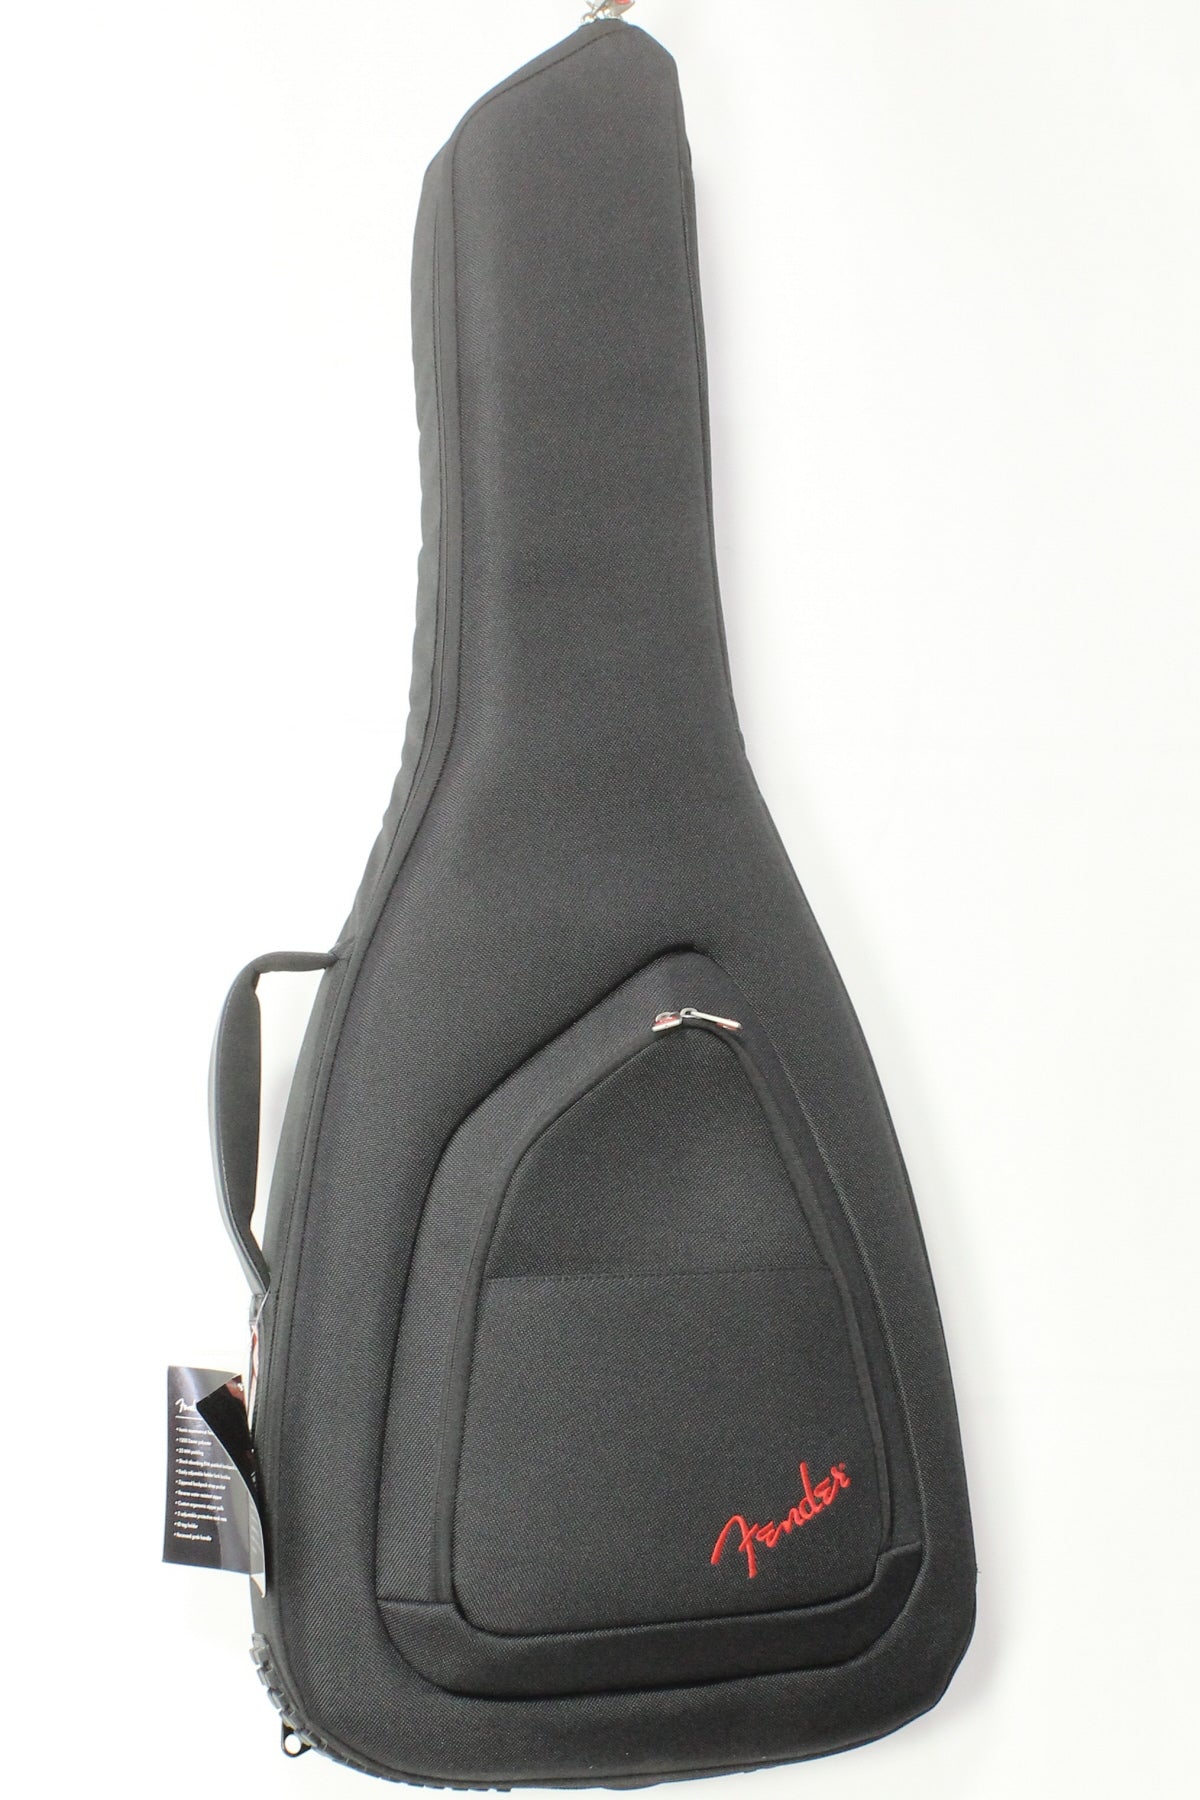 [SN US204862A] USED Fender / American Acoustasonic Stratocaster Black 2020 [09]